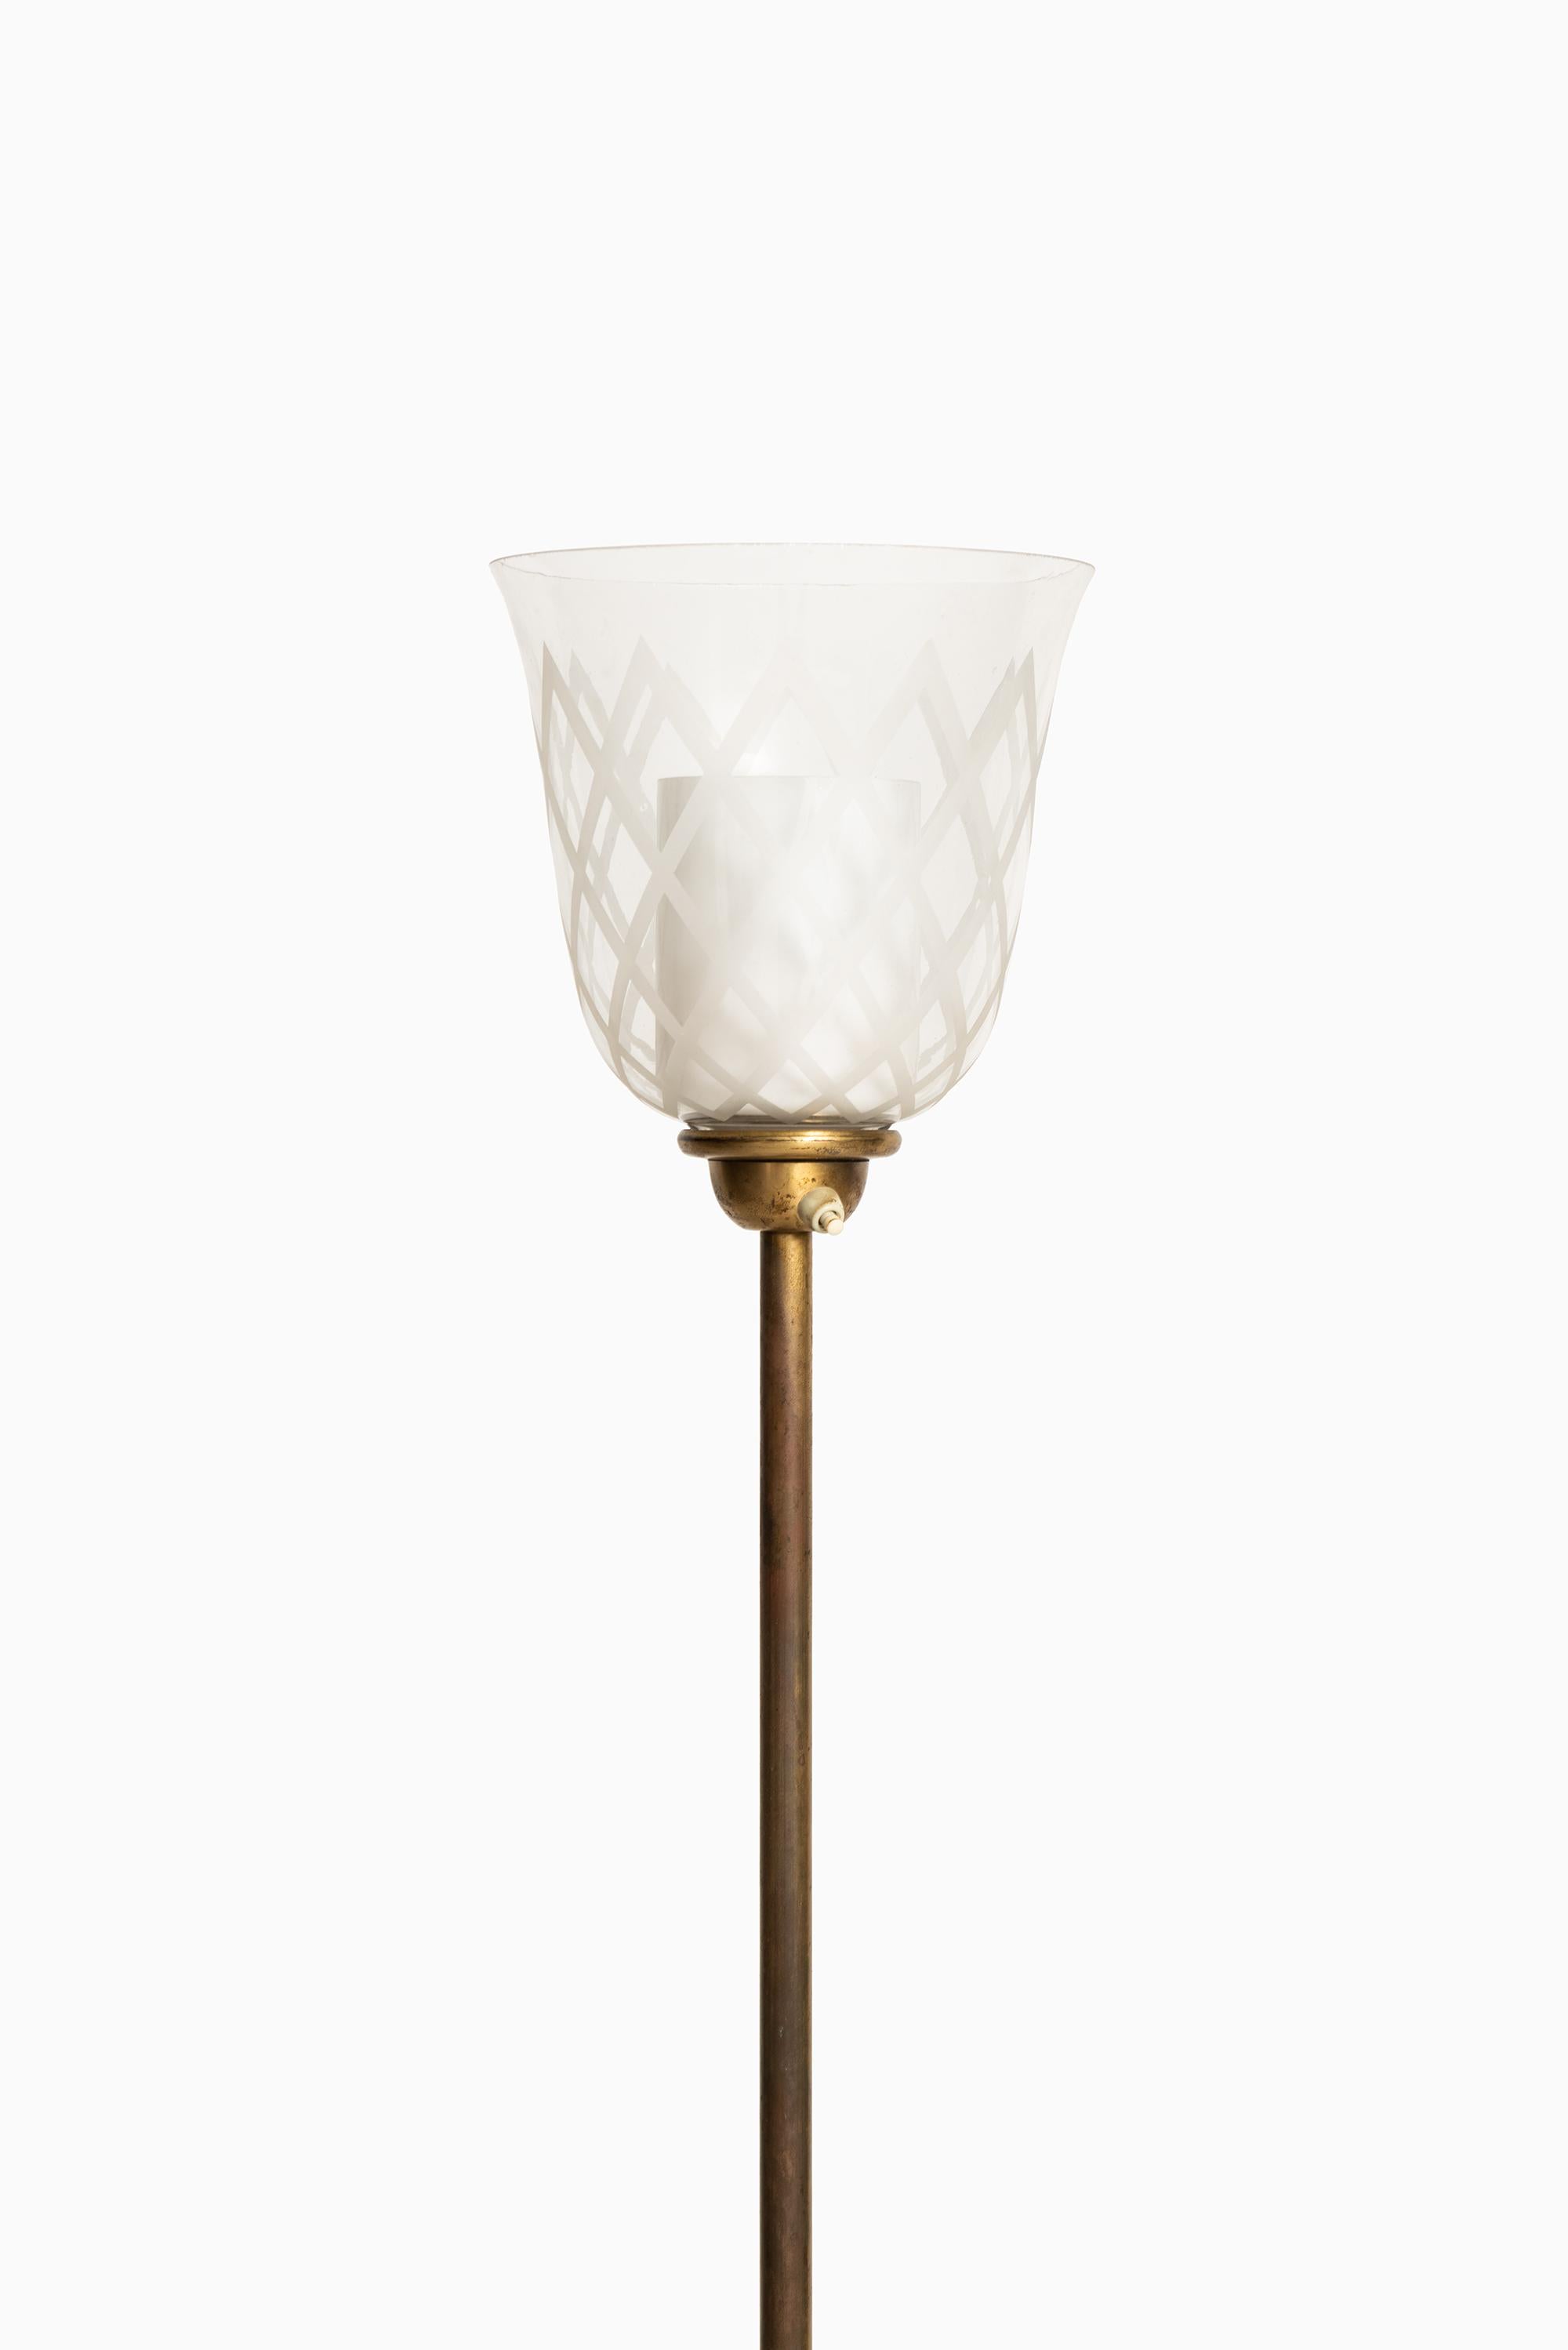 Rare floor lamp / uplight designed by Bo Notini. Produced by Glössner & Co. in Sweden.